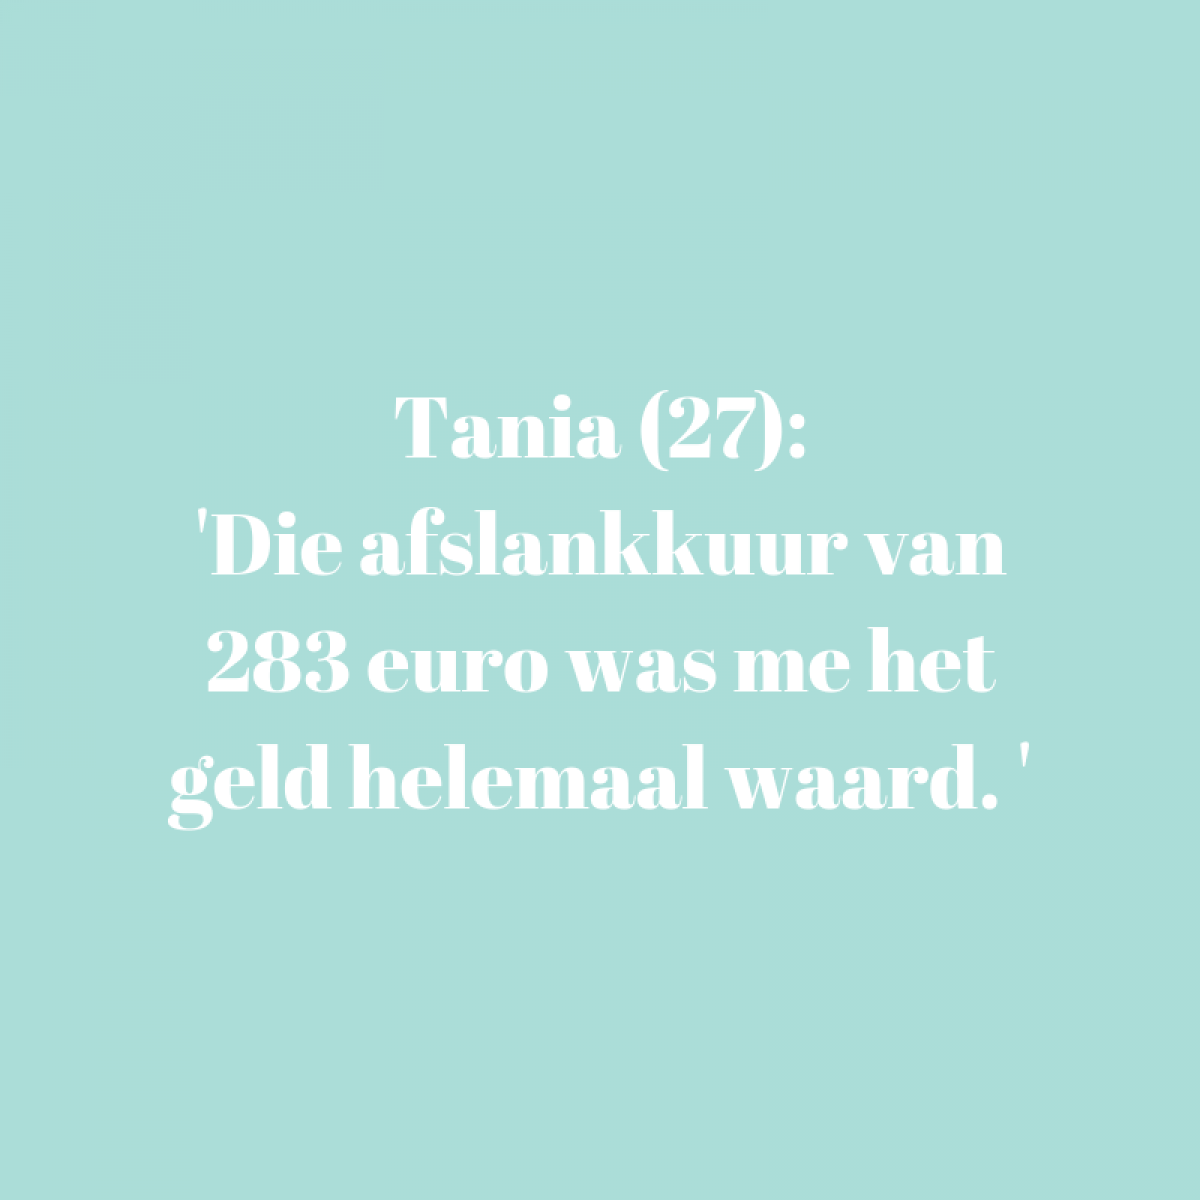 Tania (27)